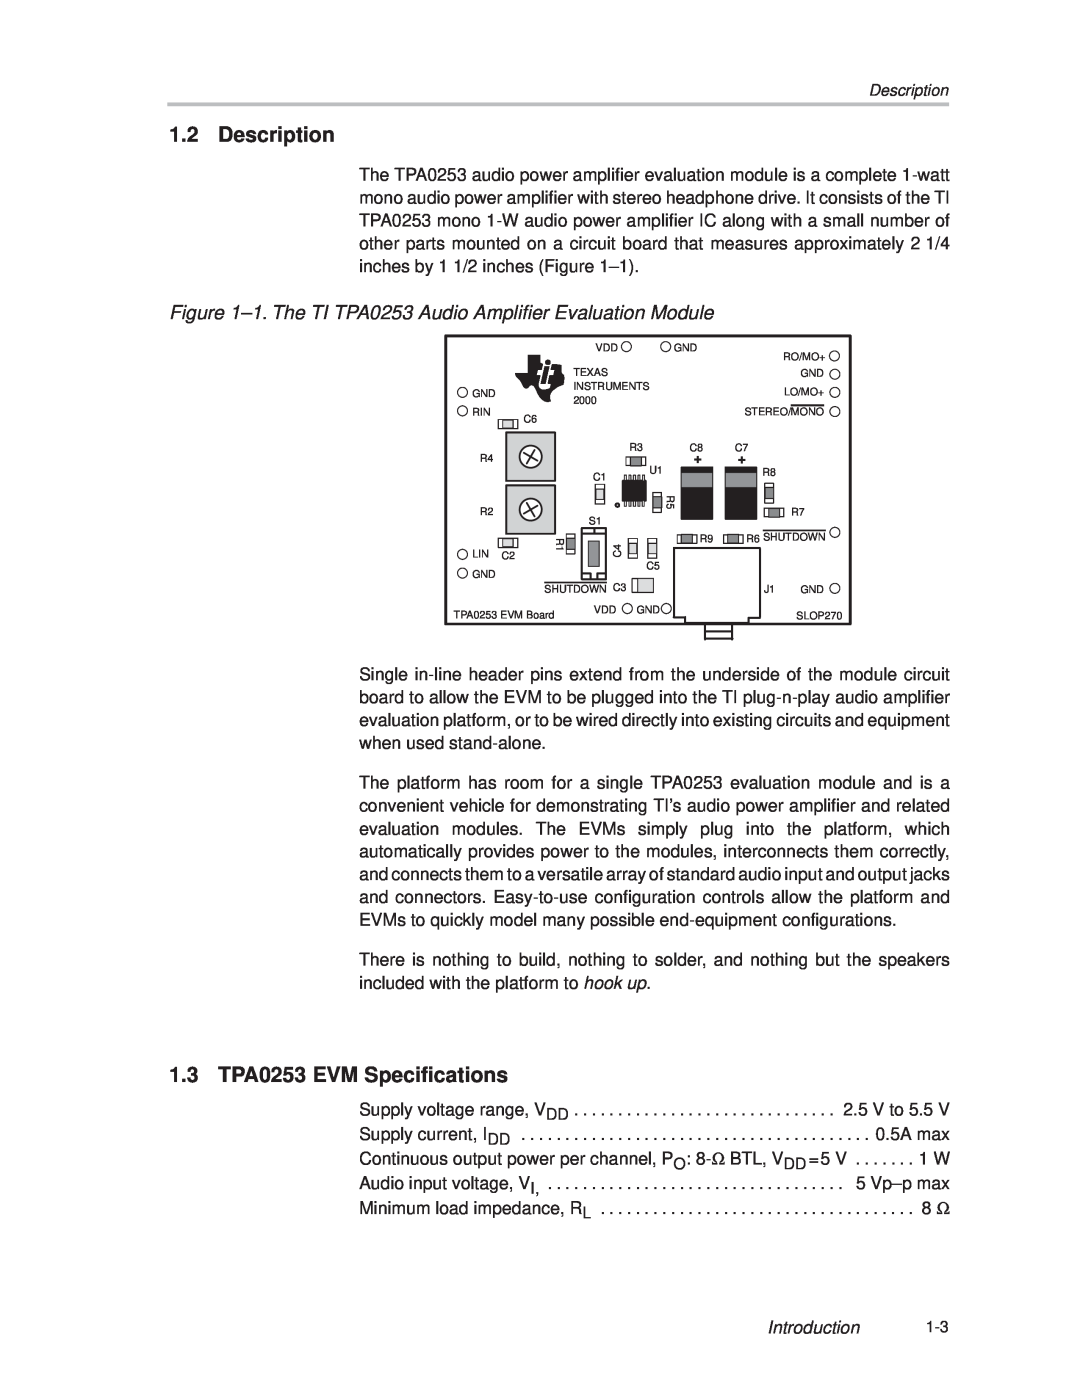 Texas Instruments manual Description, 1.3 TPA0253 EVM Specifications, Introduction 